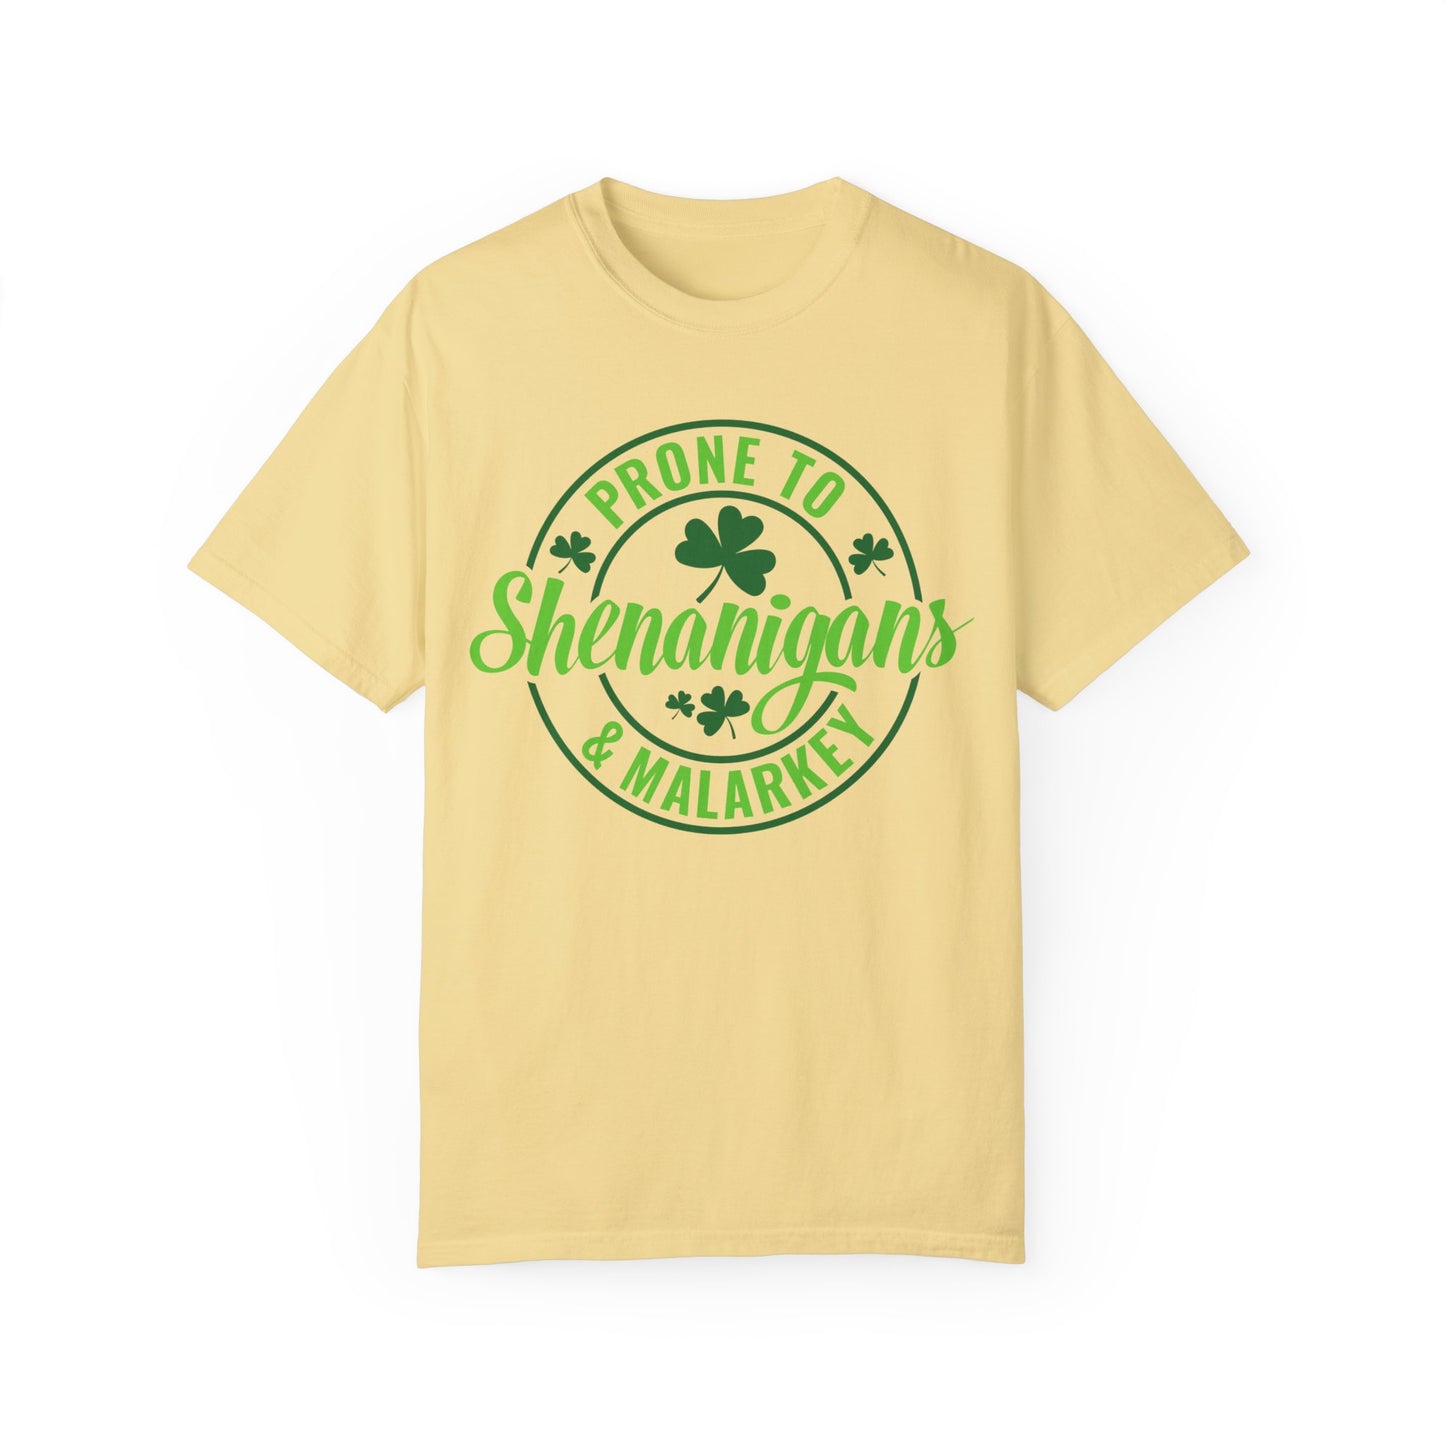 Shenanigans T-shirt